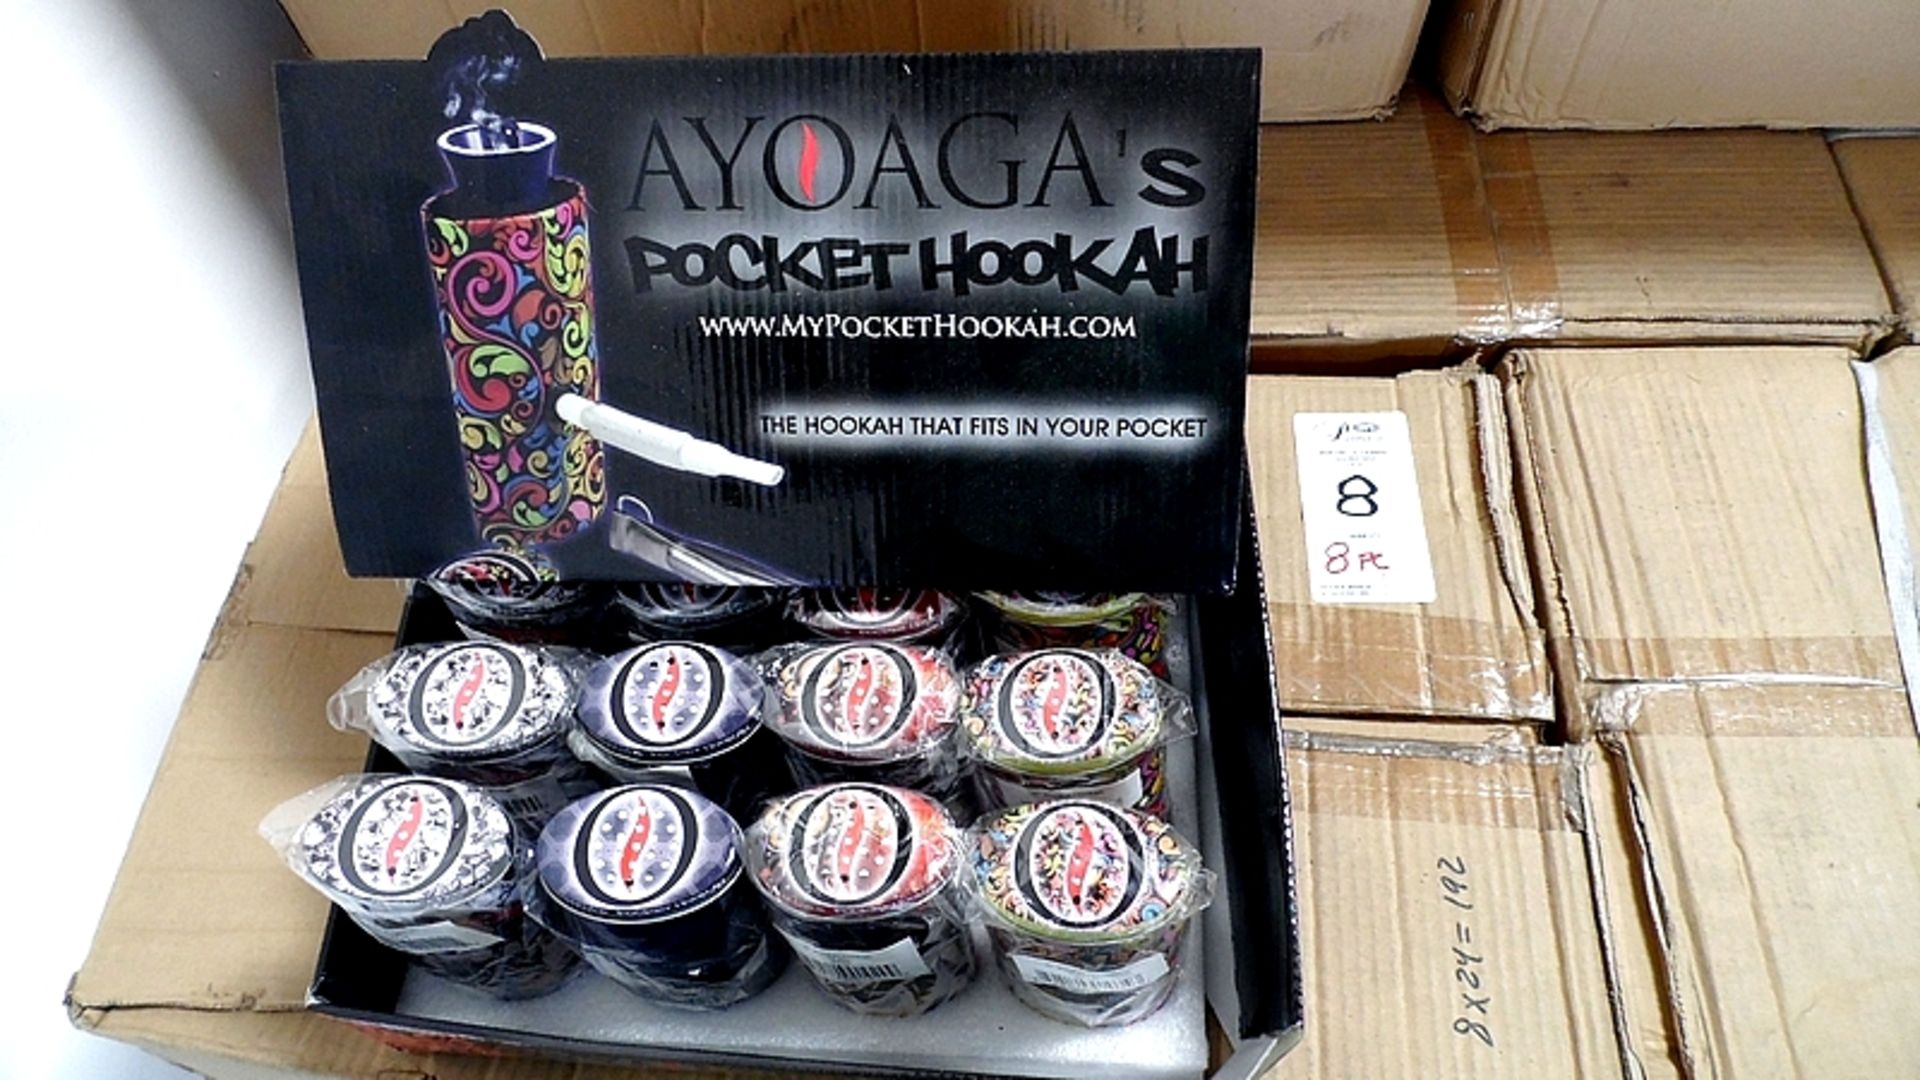 PC. OF AYOAGA'S POCKET HOOKAH